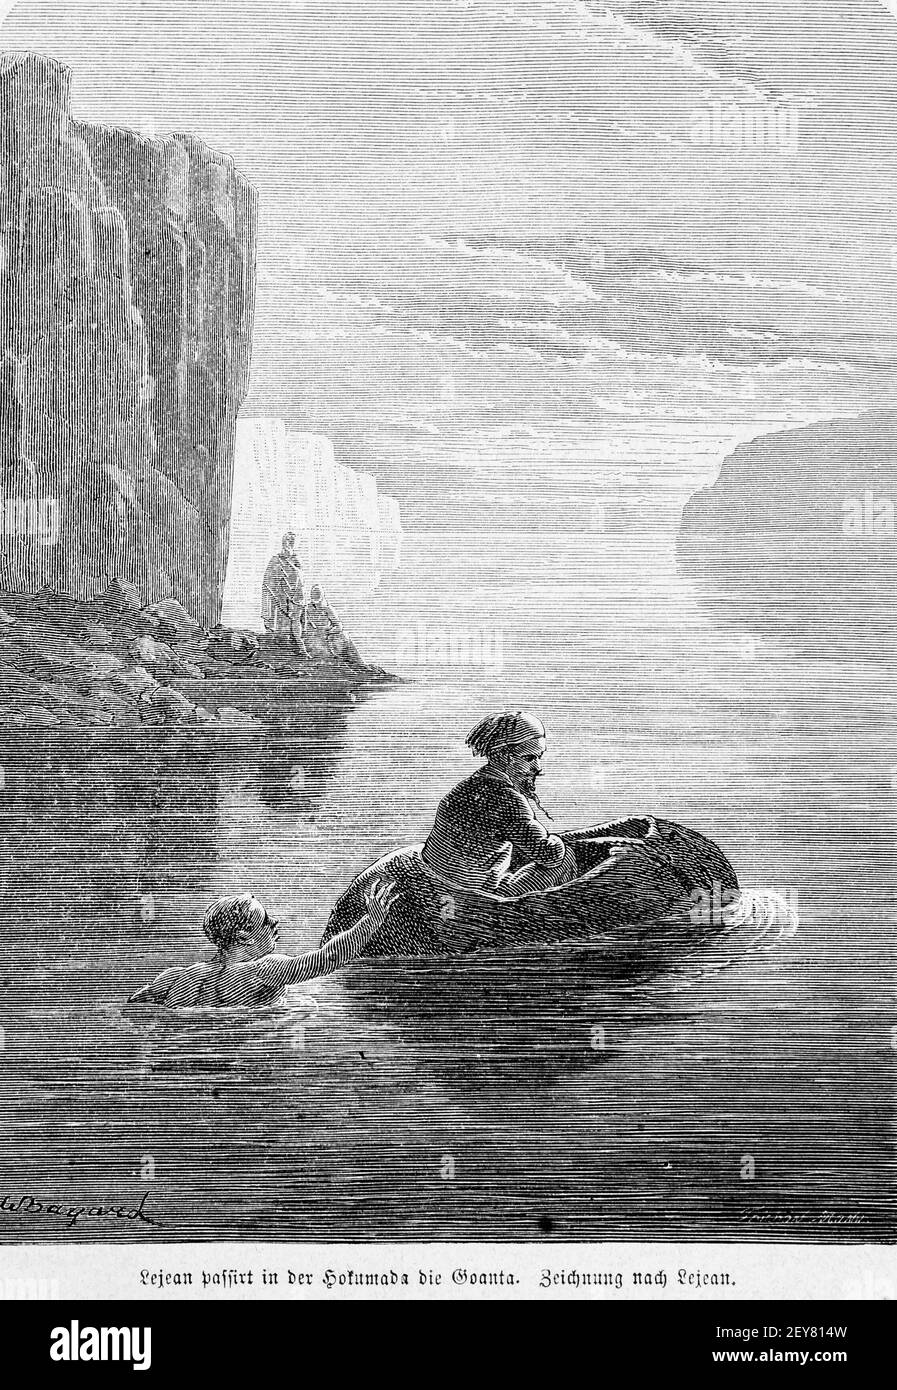 Explorer Lejean über den Goanta Fluss in Hokumada, Dr. Richard Andree, Abessina, Äthiopien, Ostafrika, Abessinien, Land und Volk, Leipzig, 1869 Stockfoto